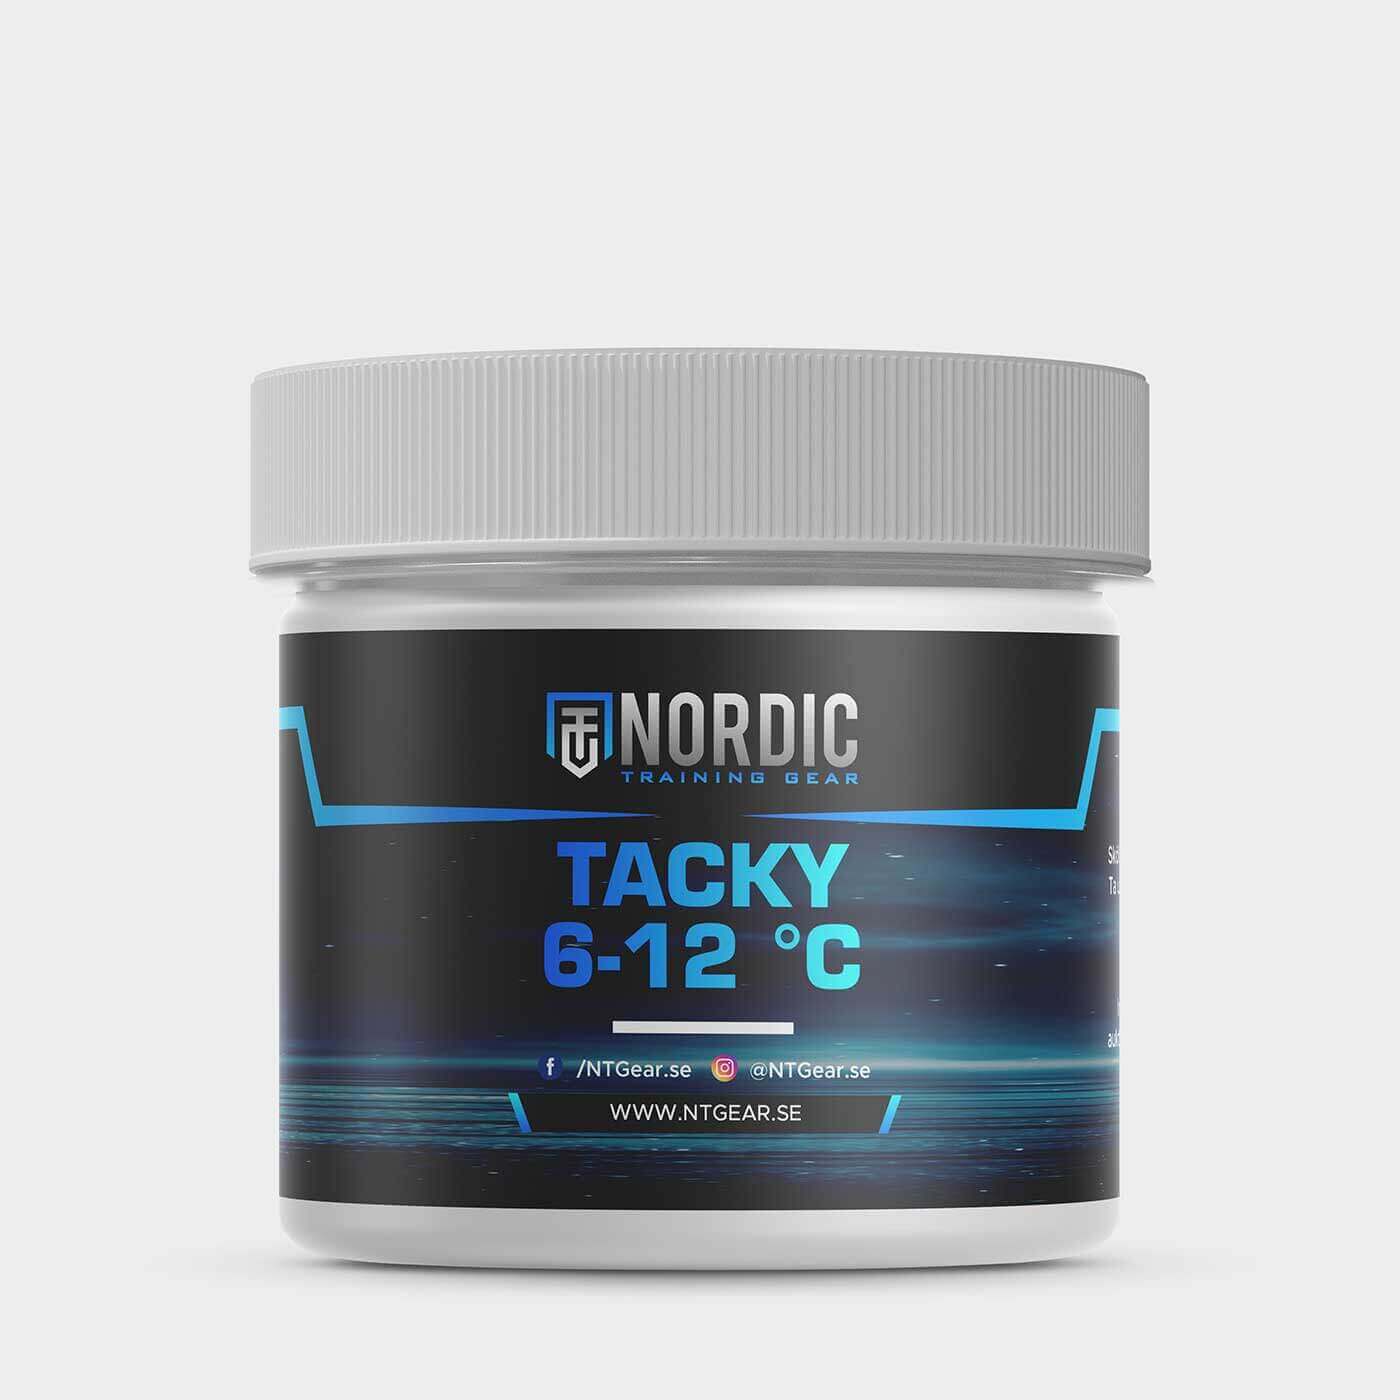 Tacky, 6-12, 125 ml | NTGear.se